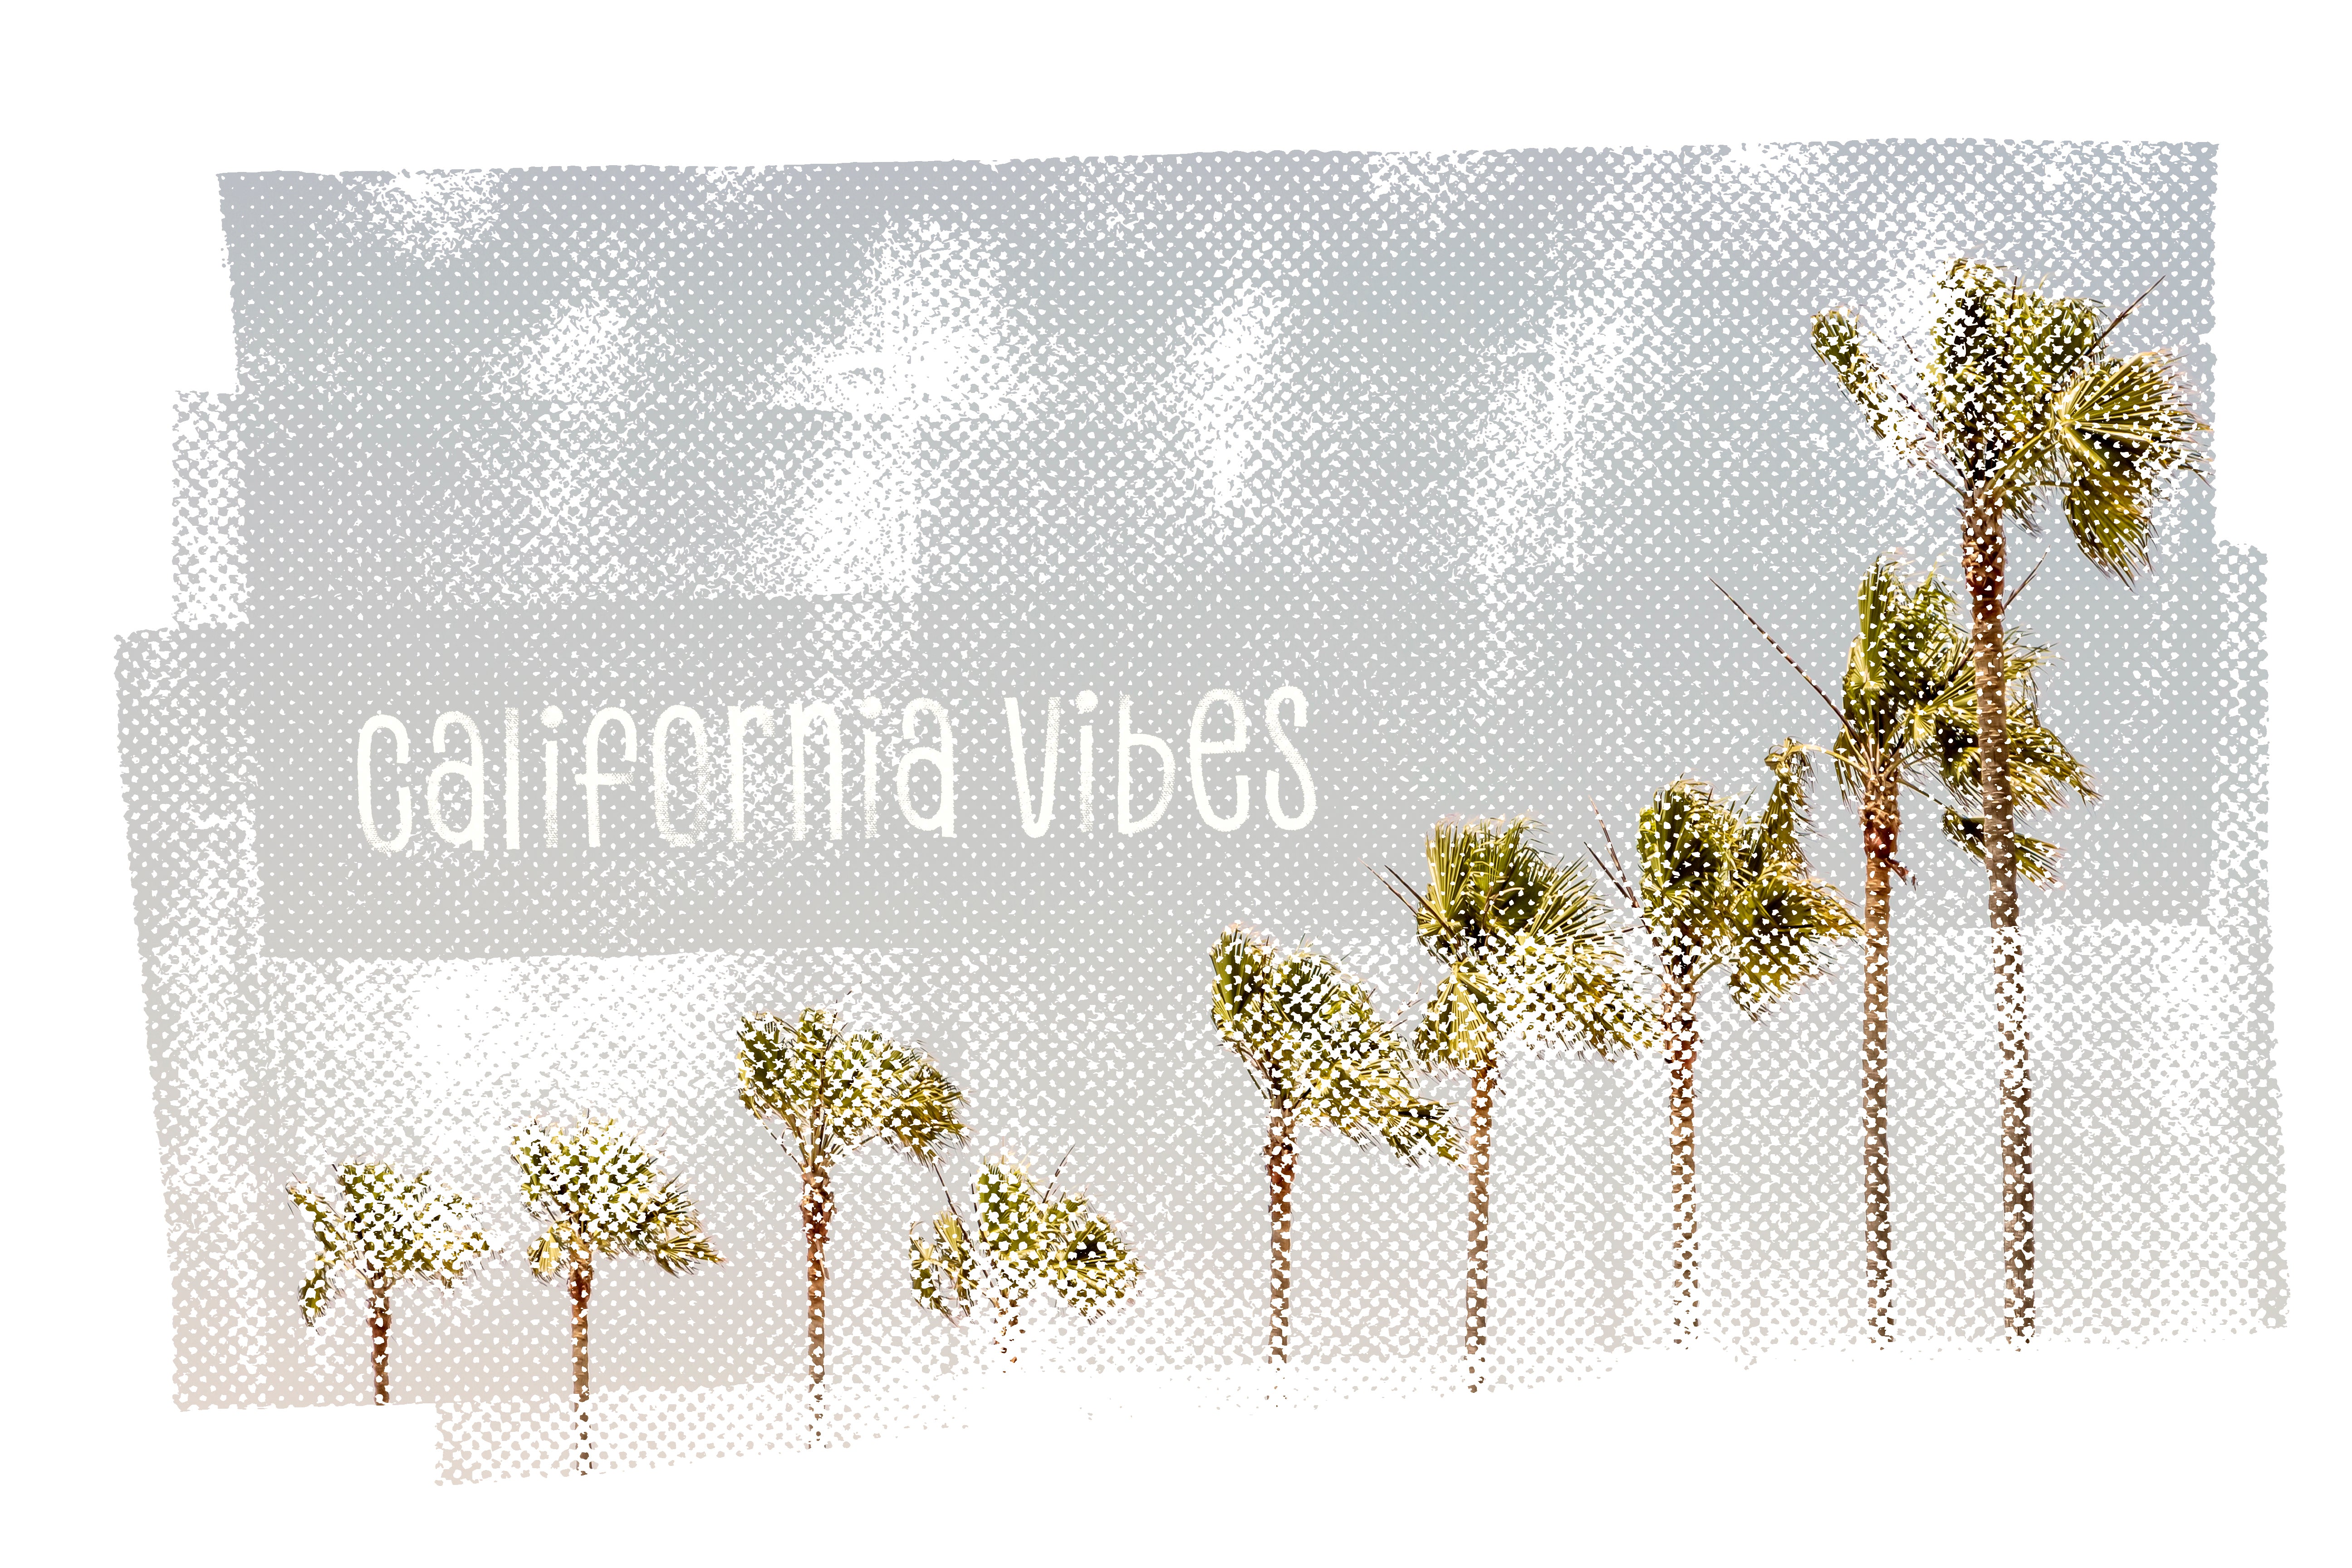 California Vibes Vintage